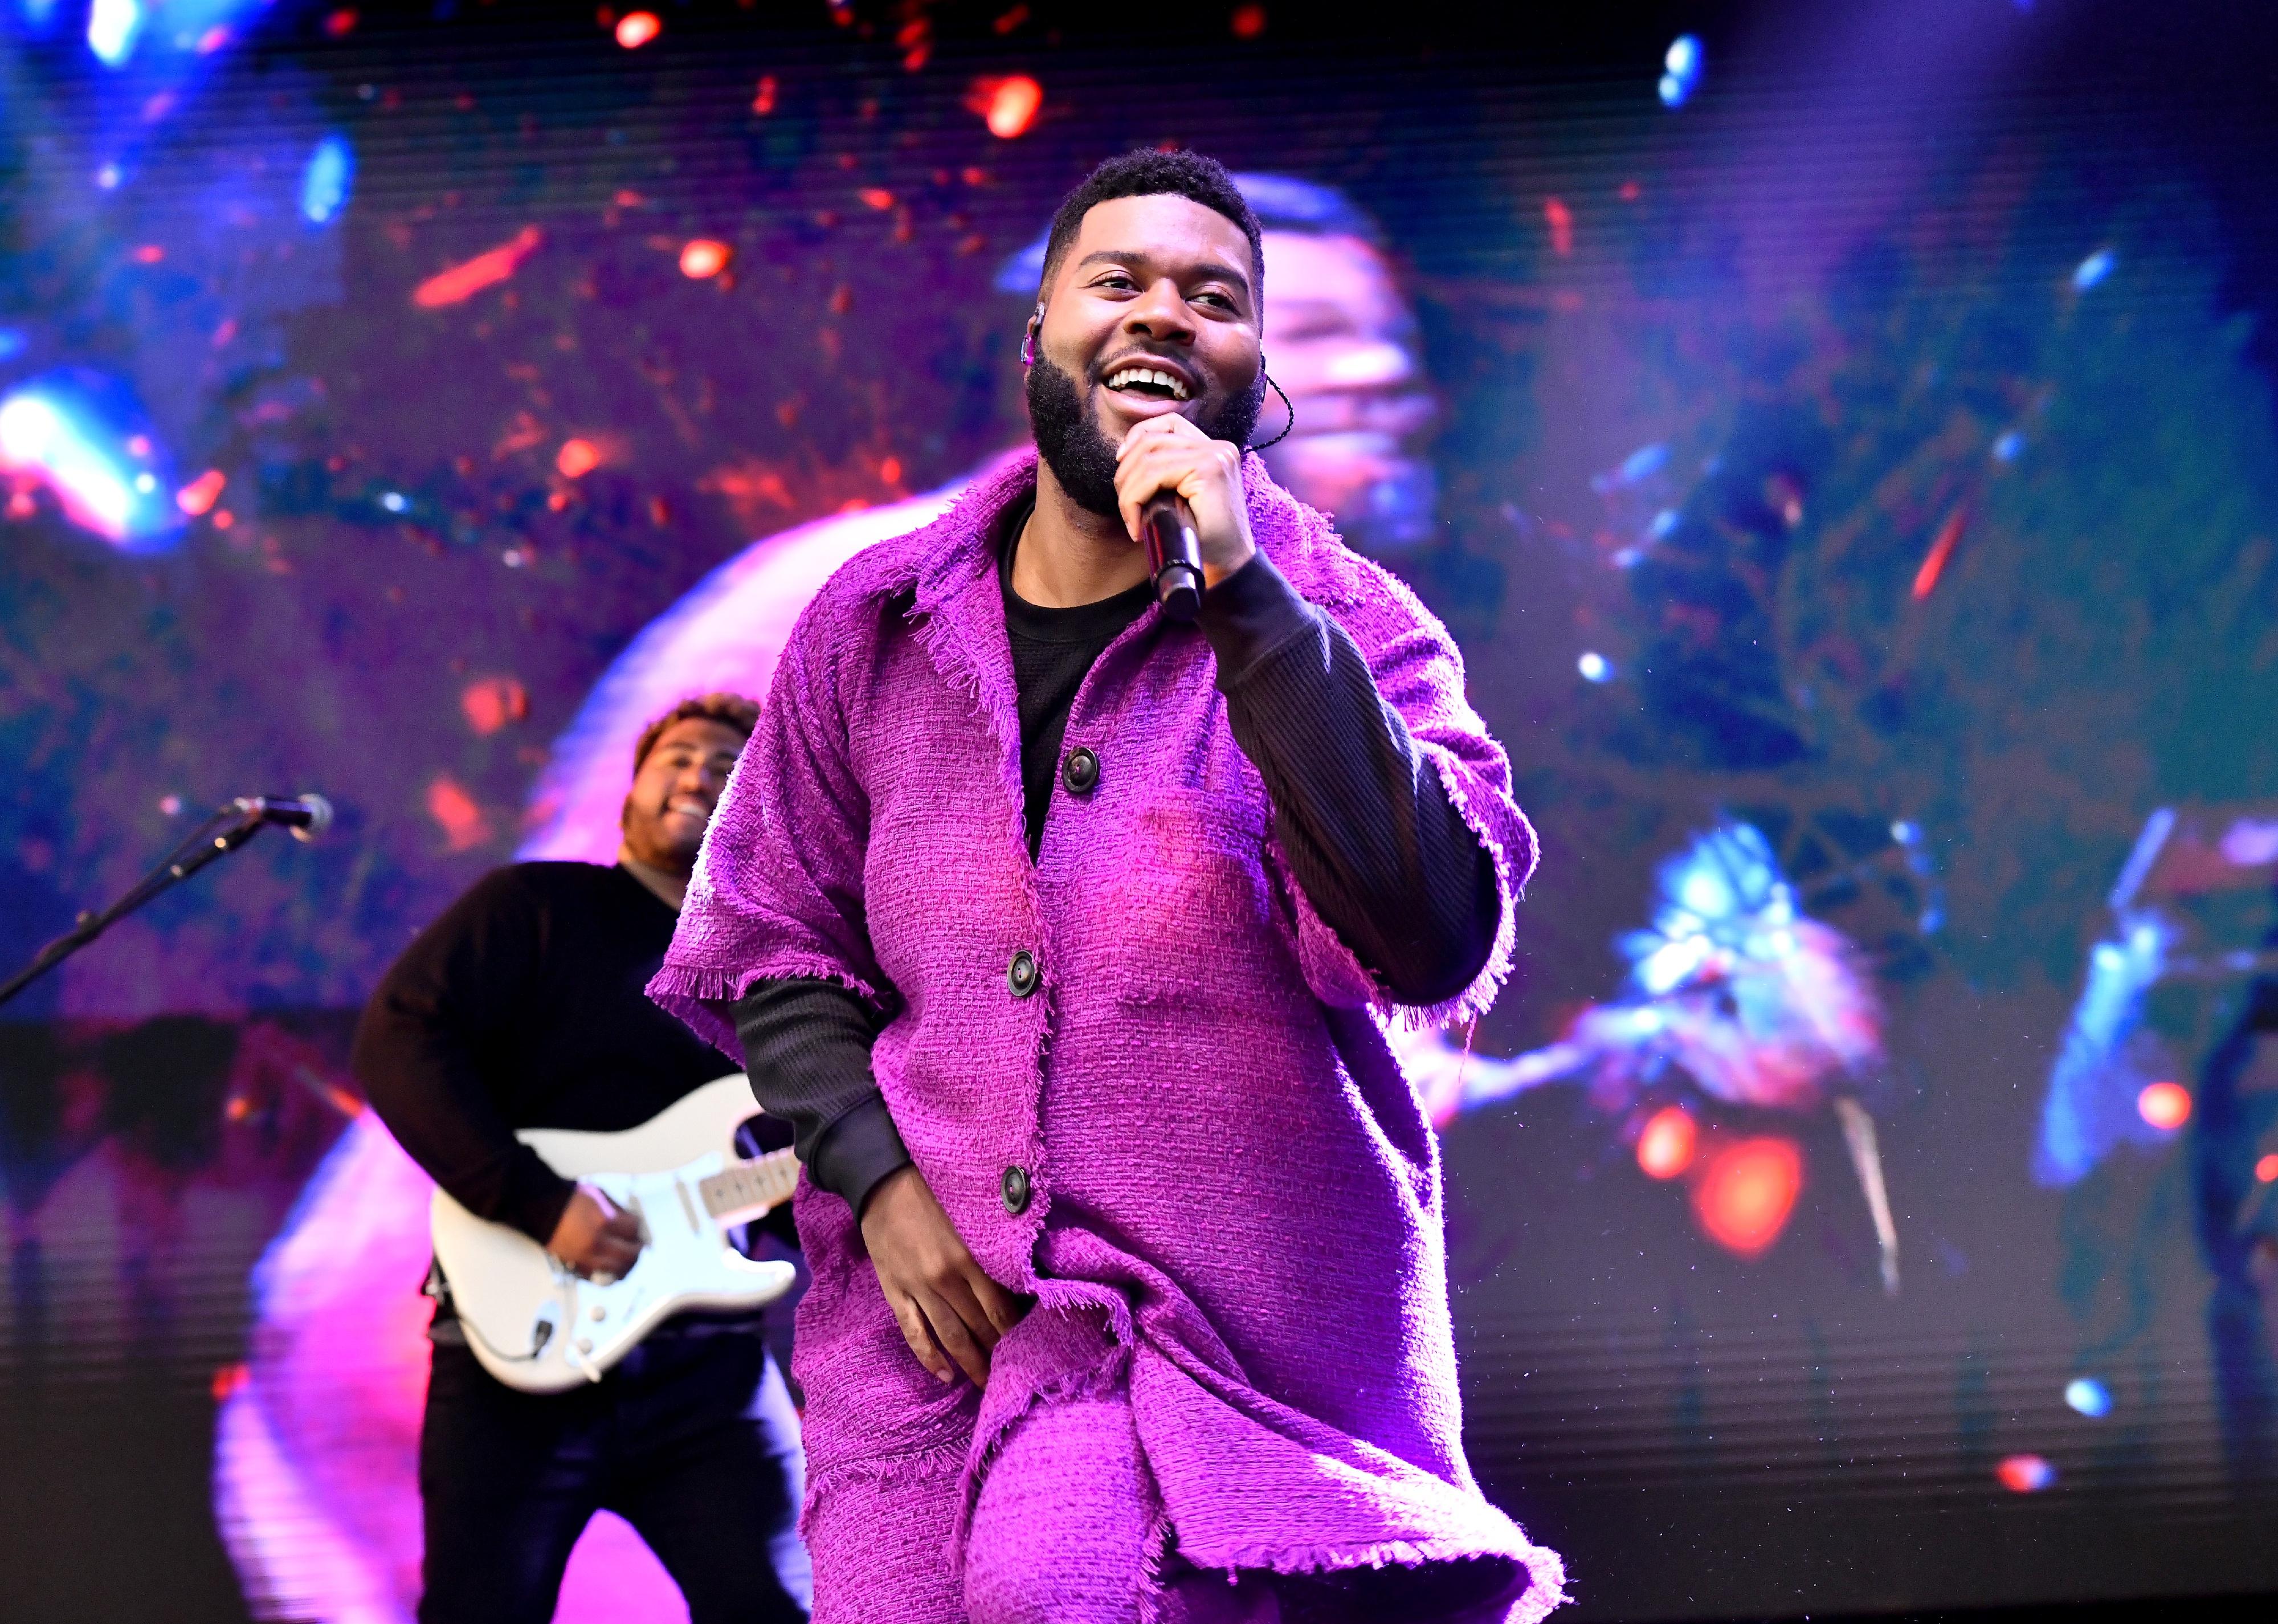 Khalid performing onstage in a purple suit.